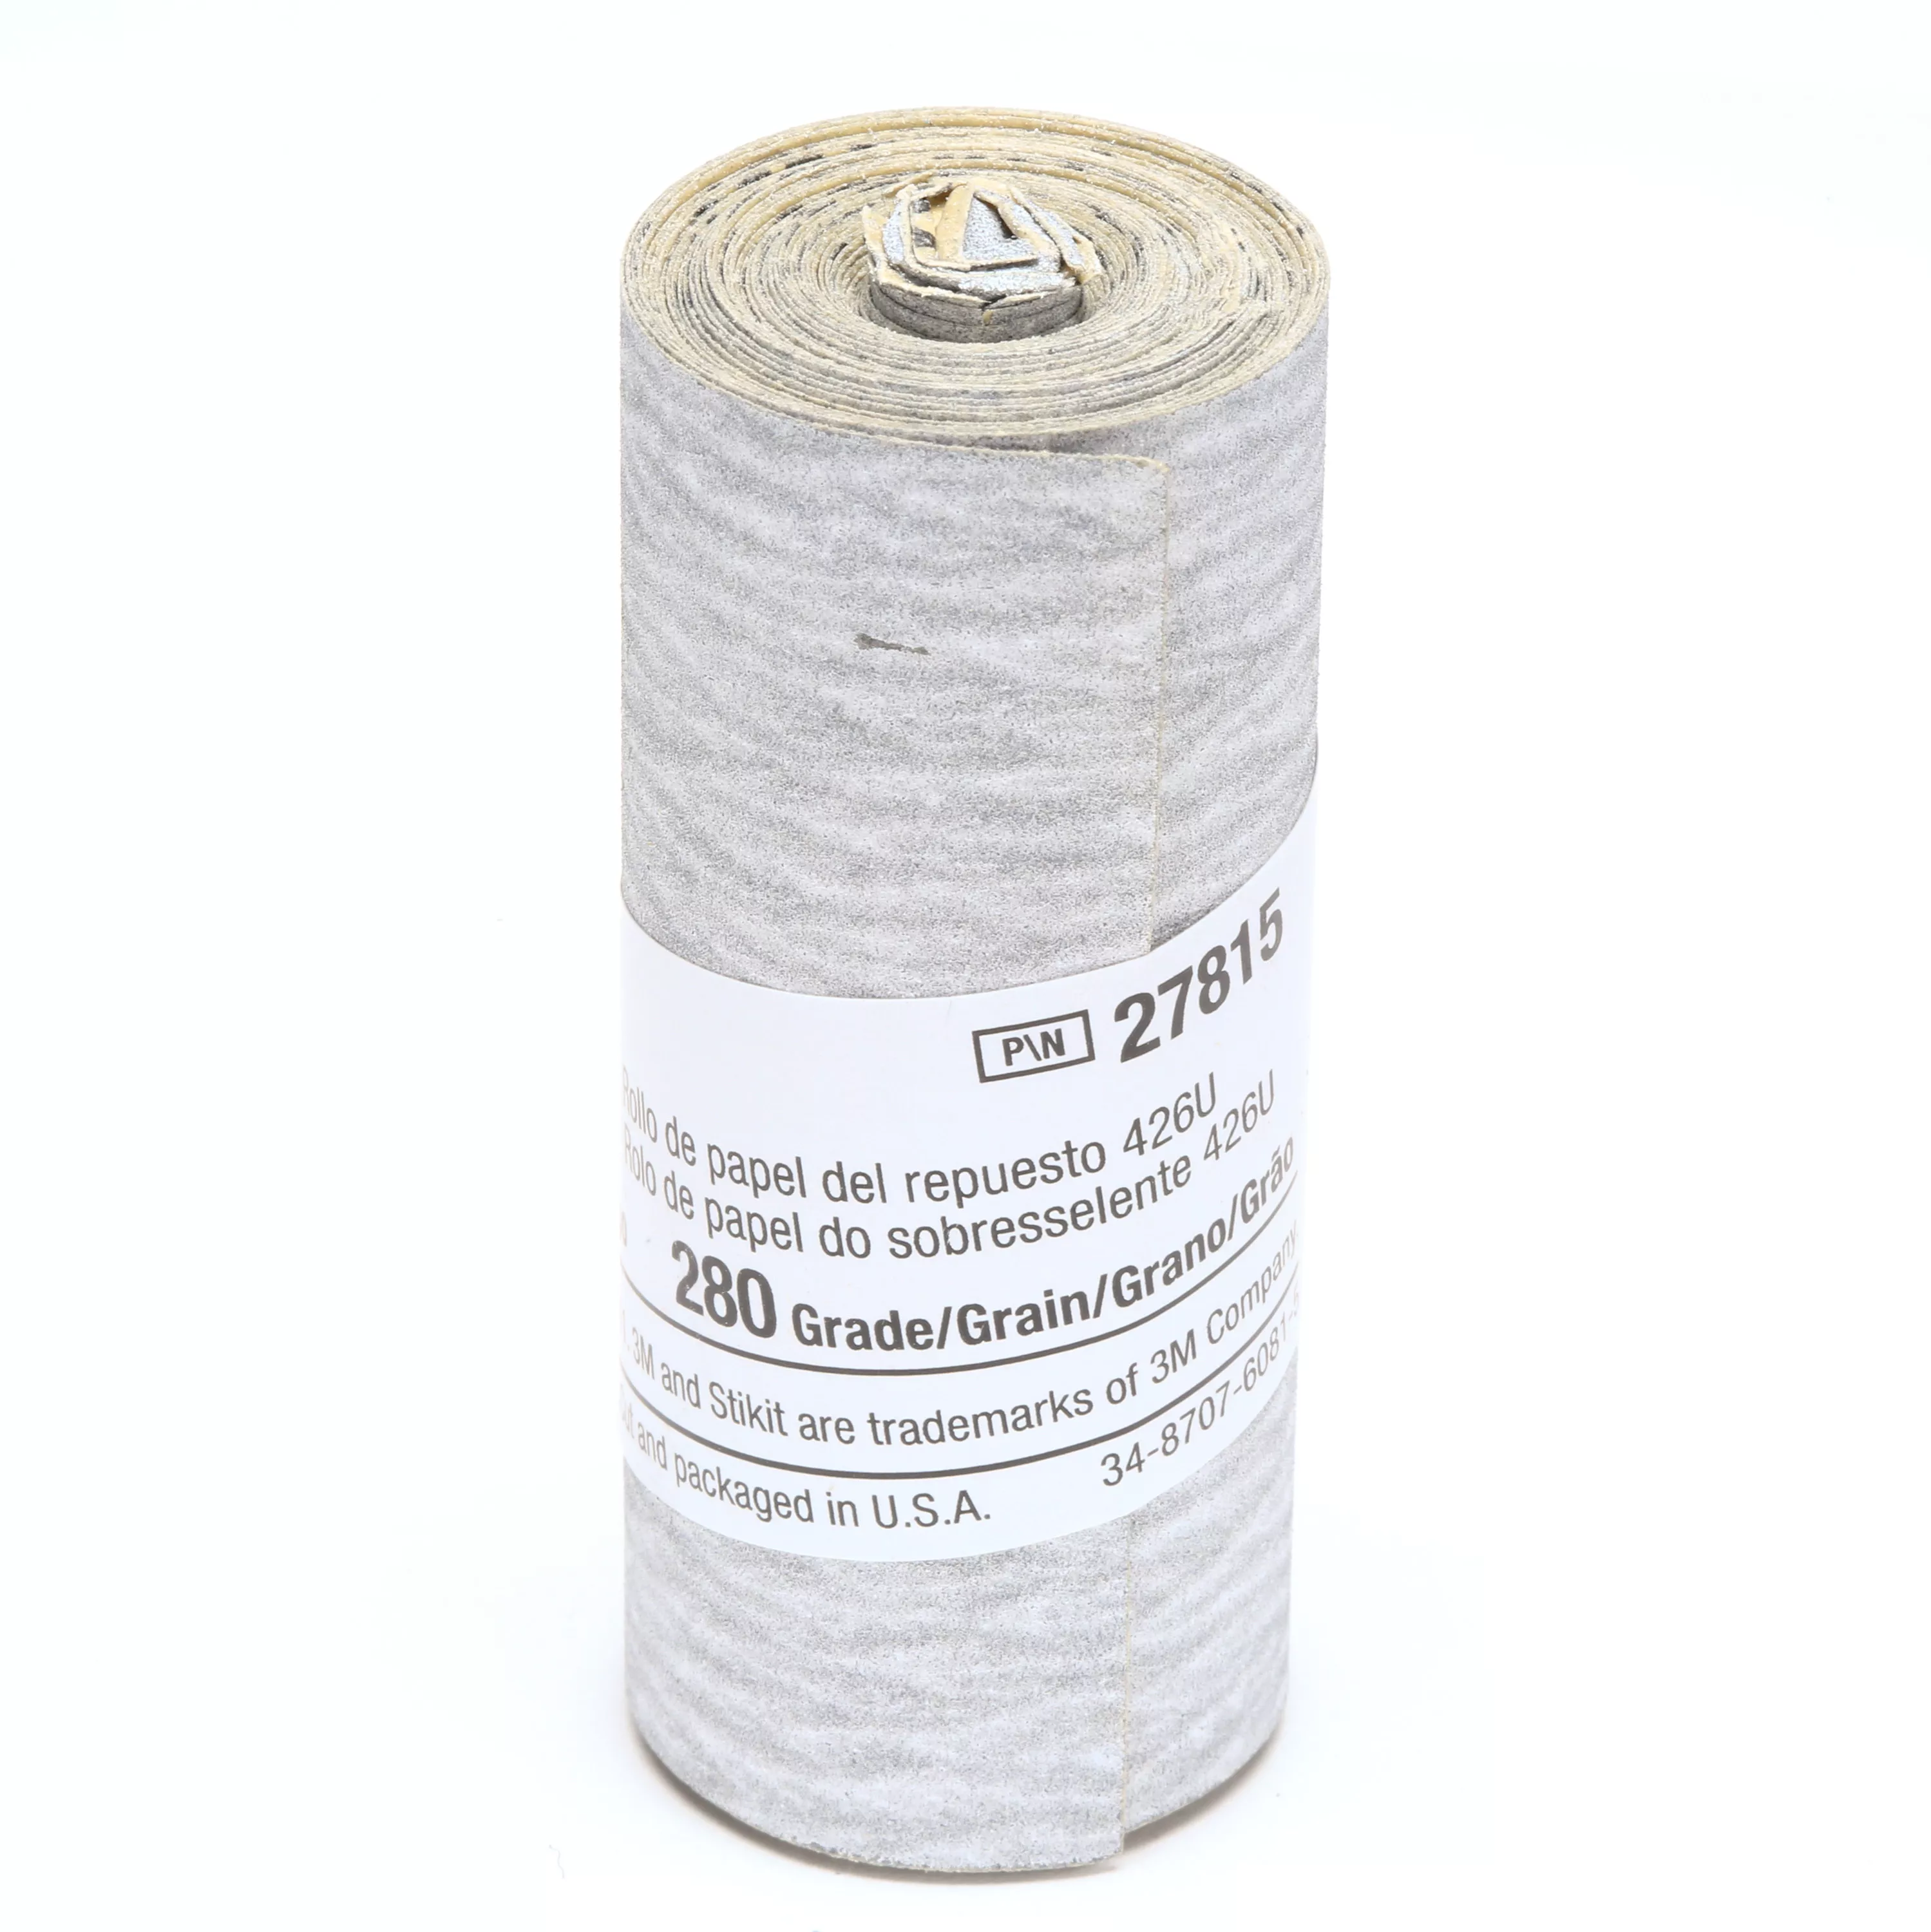 3M™ Stikit™ Paper Refill Roll 426U, 280 A-weight, 2-1/2 in x 100 in,
10/Carton, 50 ea/Case